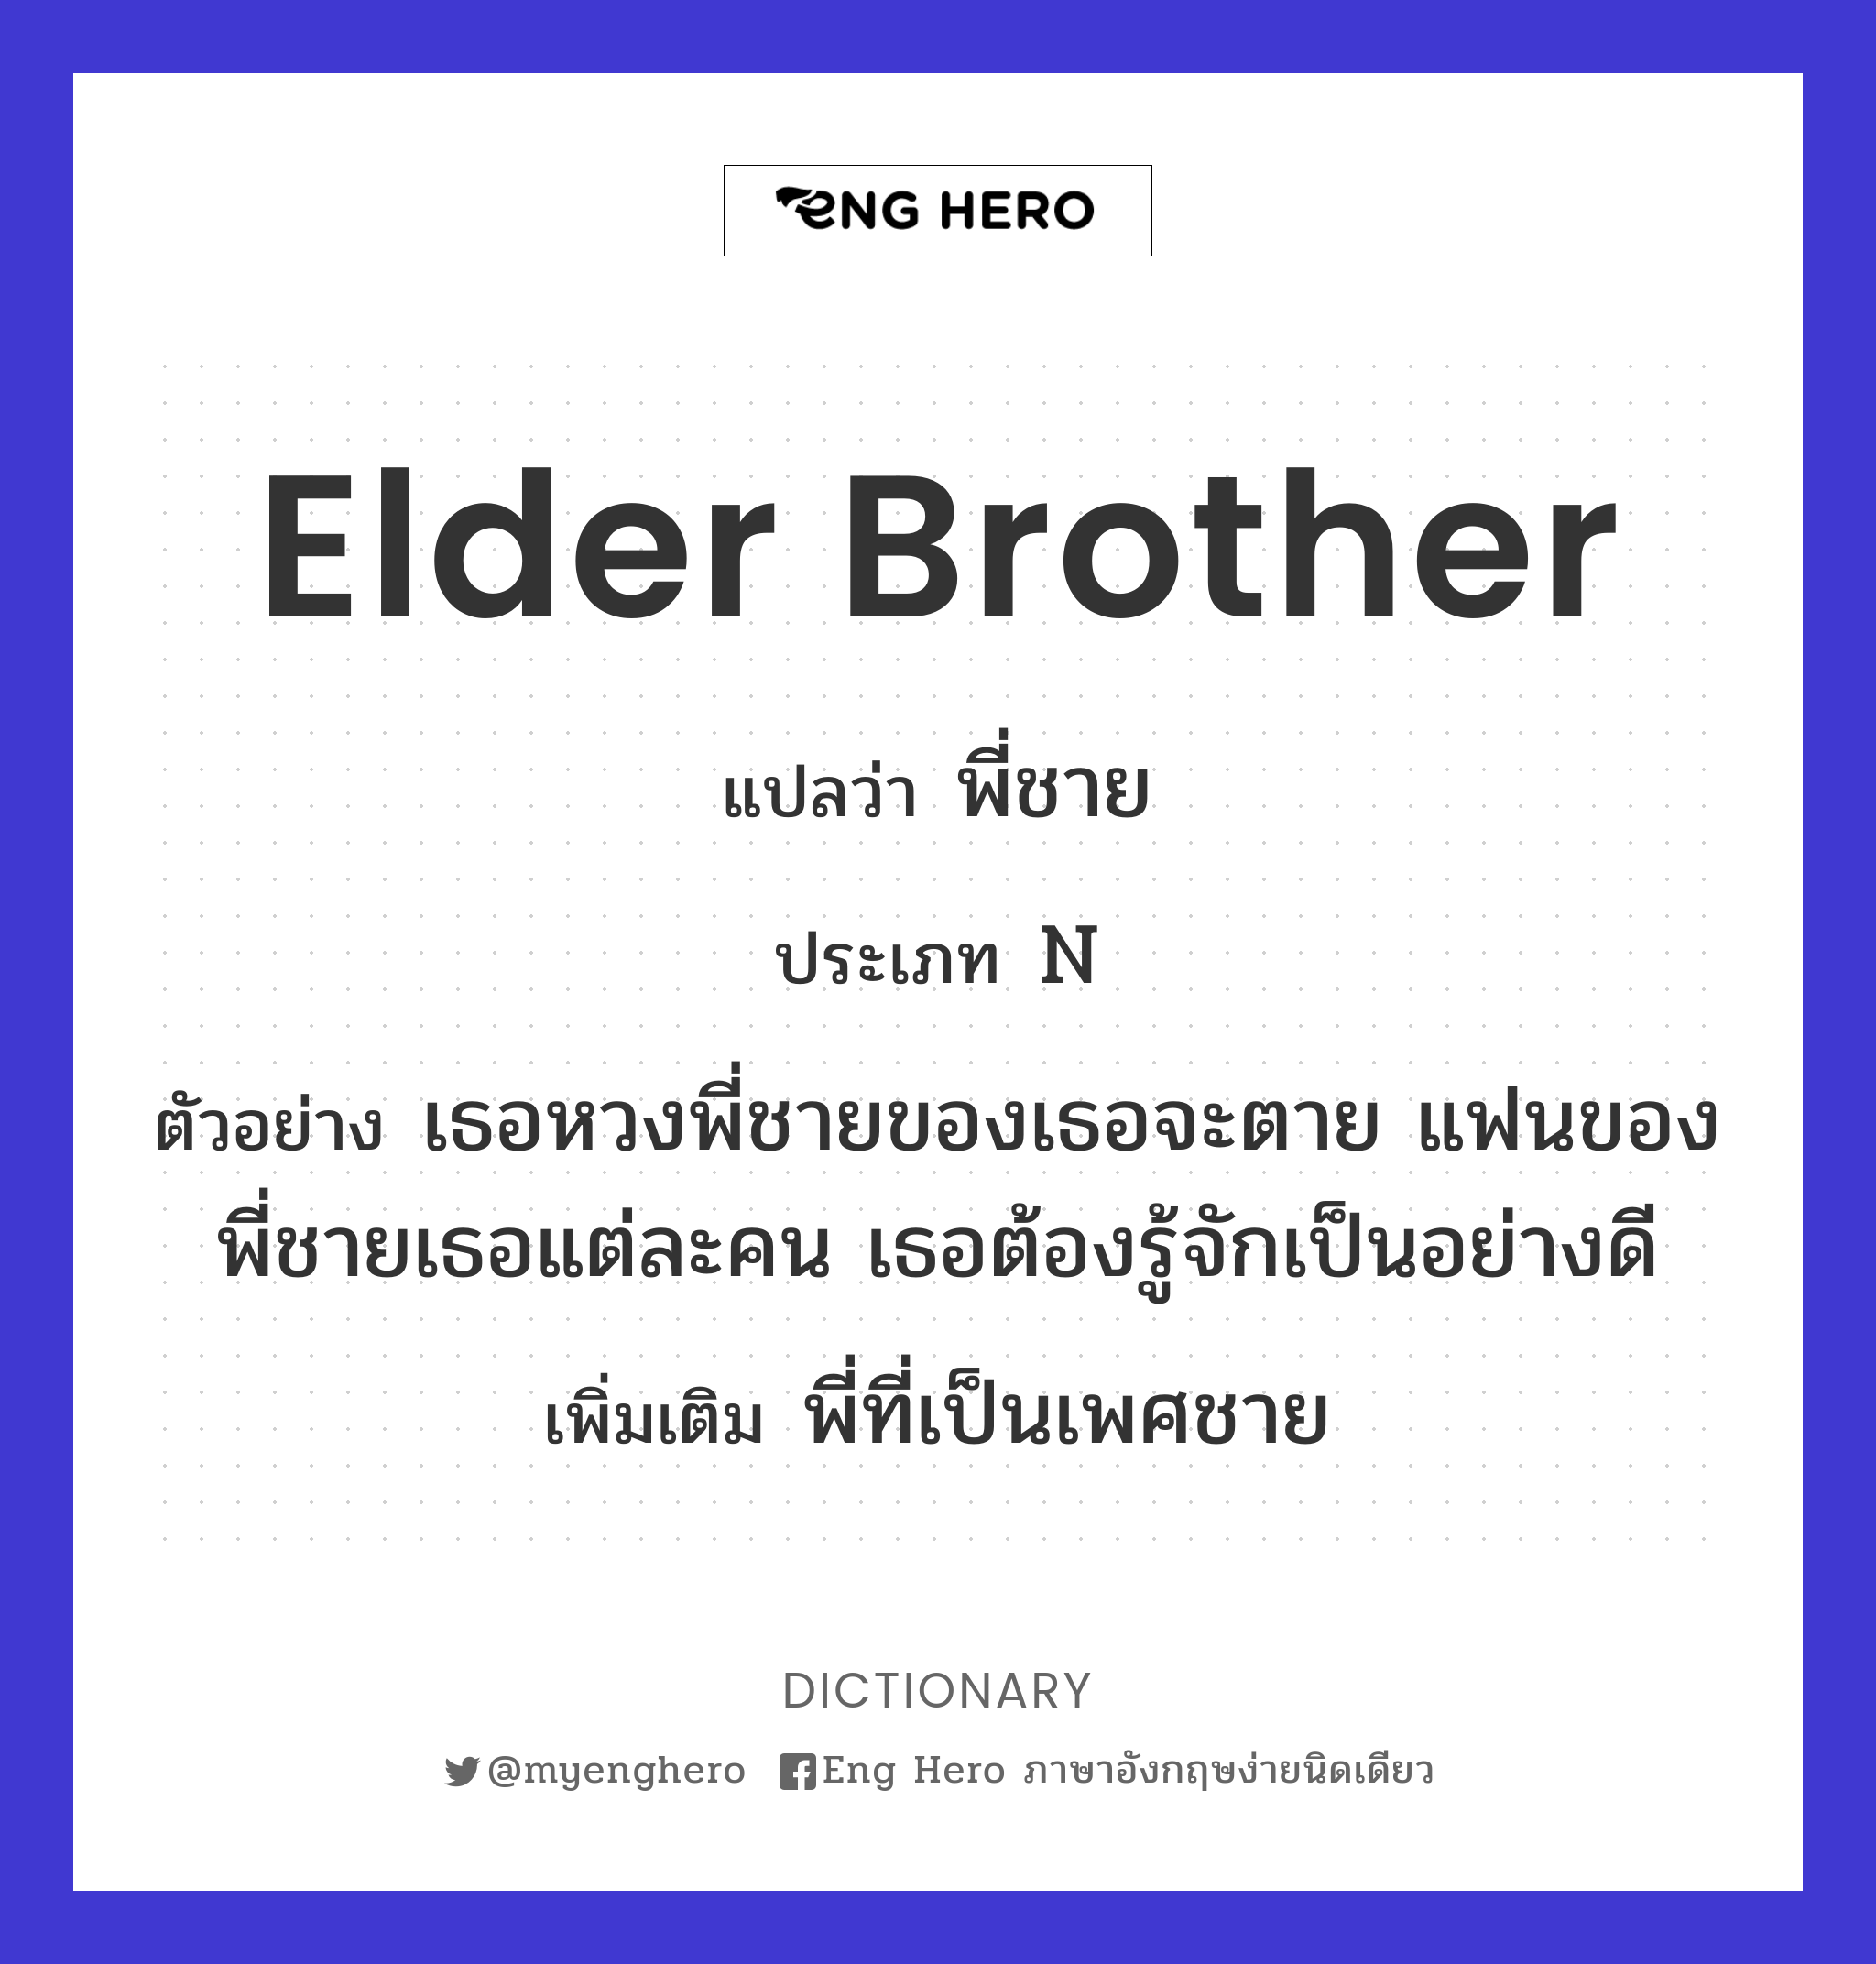 elder brother